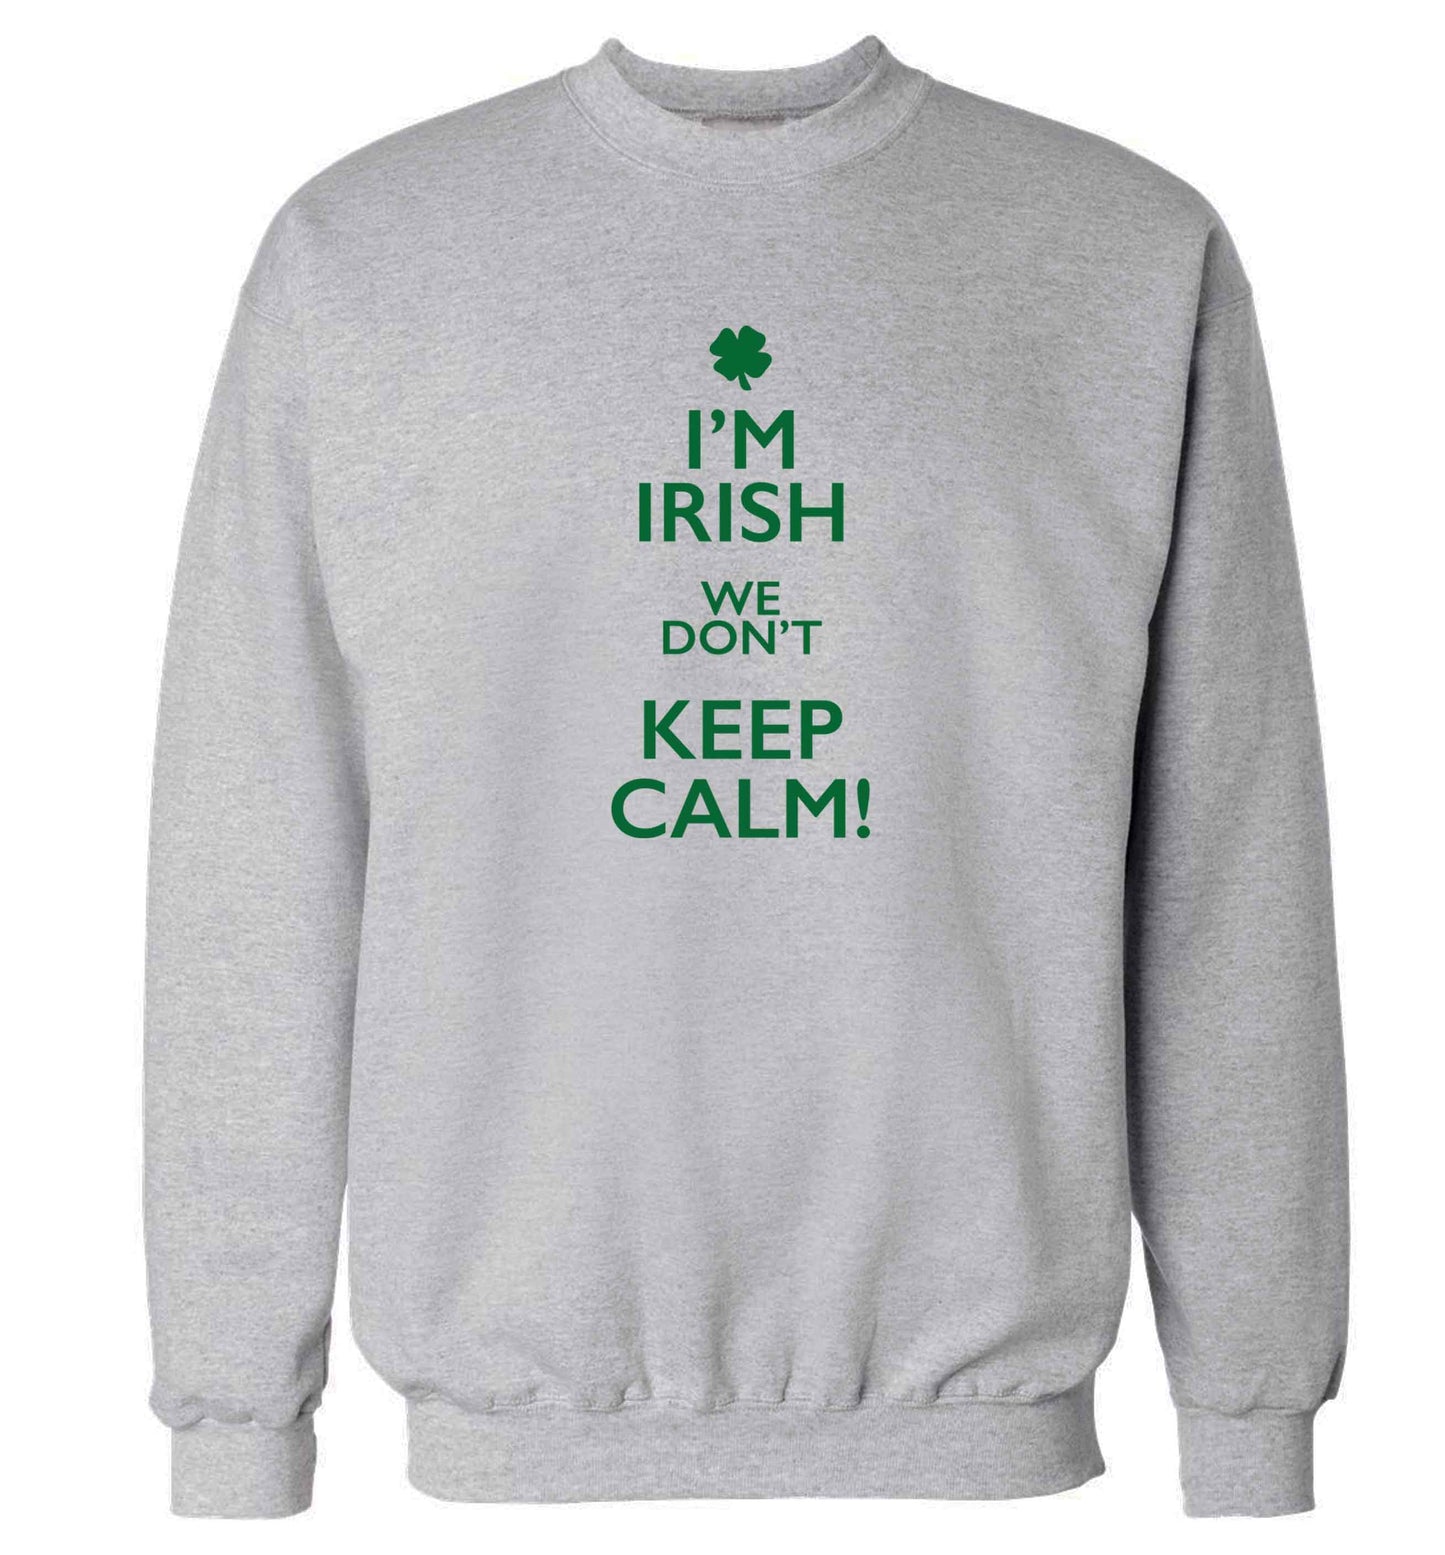 I'm Irish we don't keep calm adult's unisex grey sweater 2XL